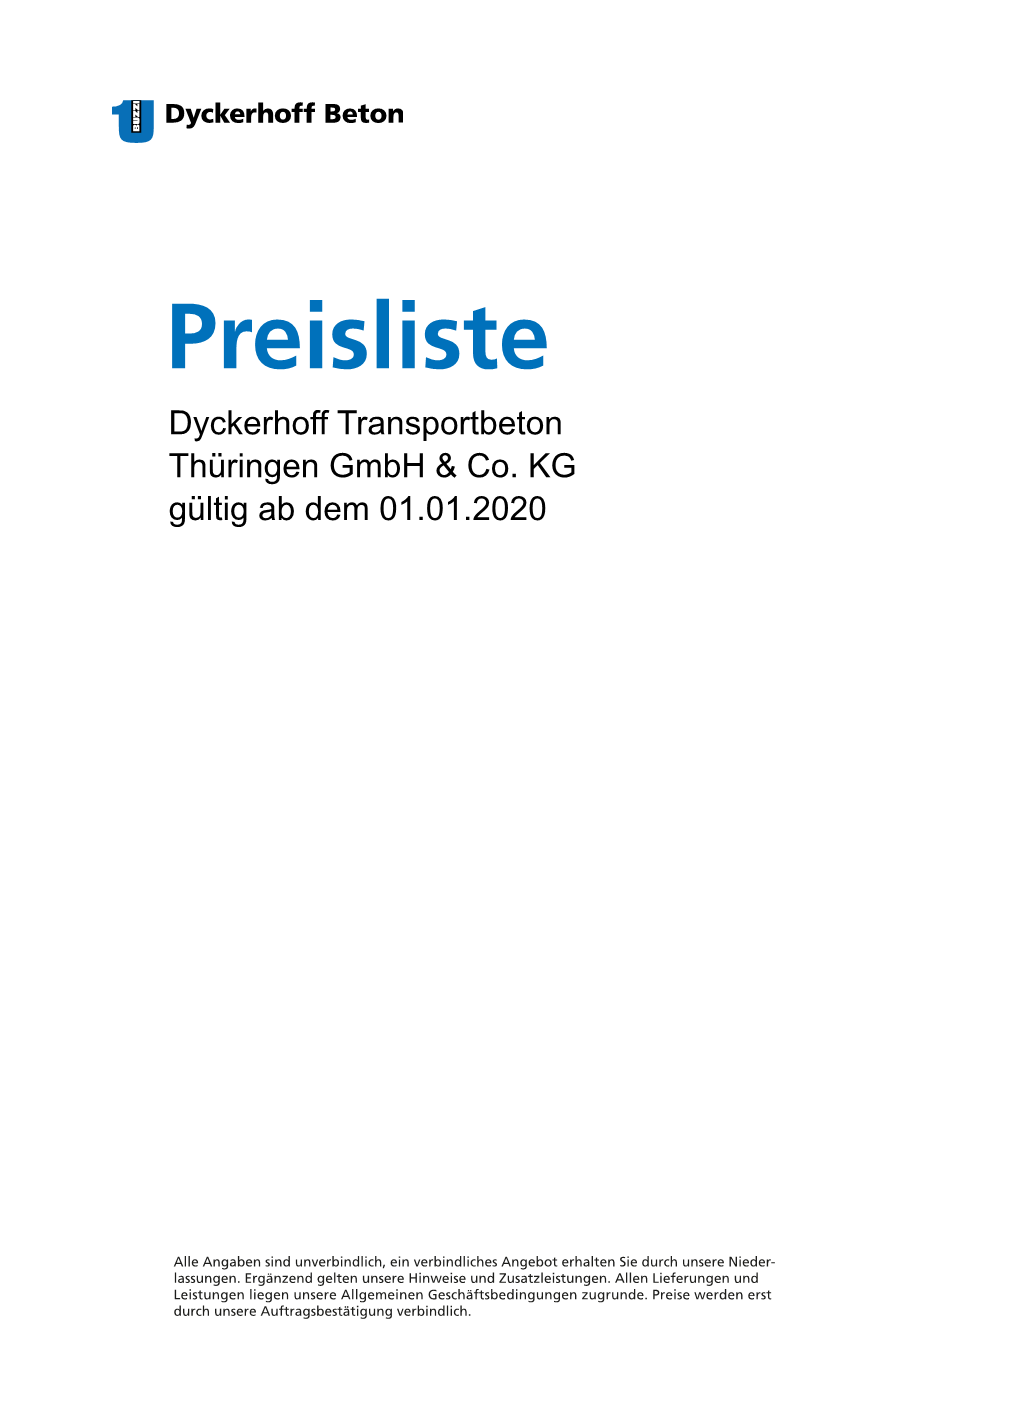 Preisliste Dyckerhoff Transportbeton Thüringen Gmbh & Co